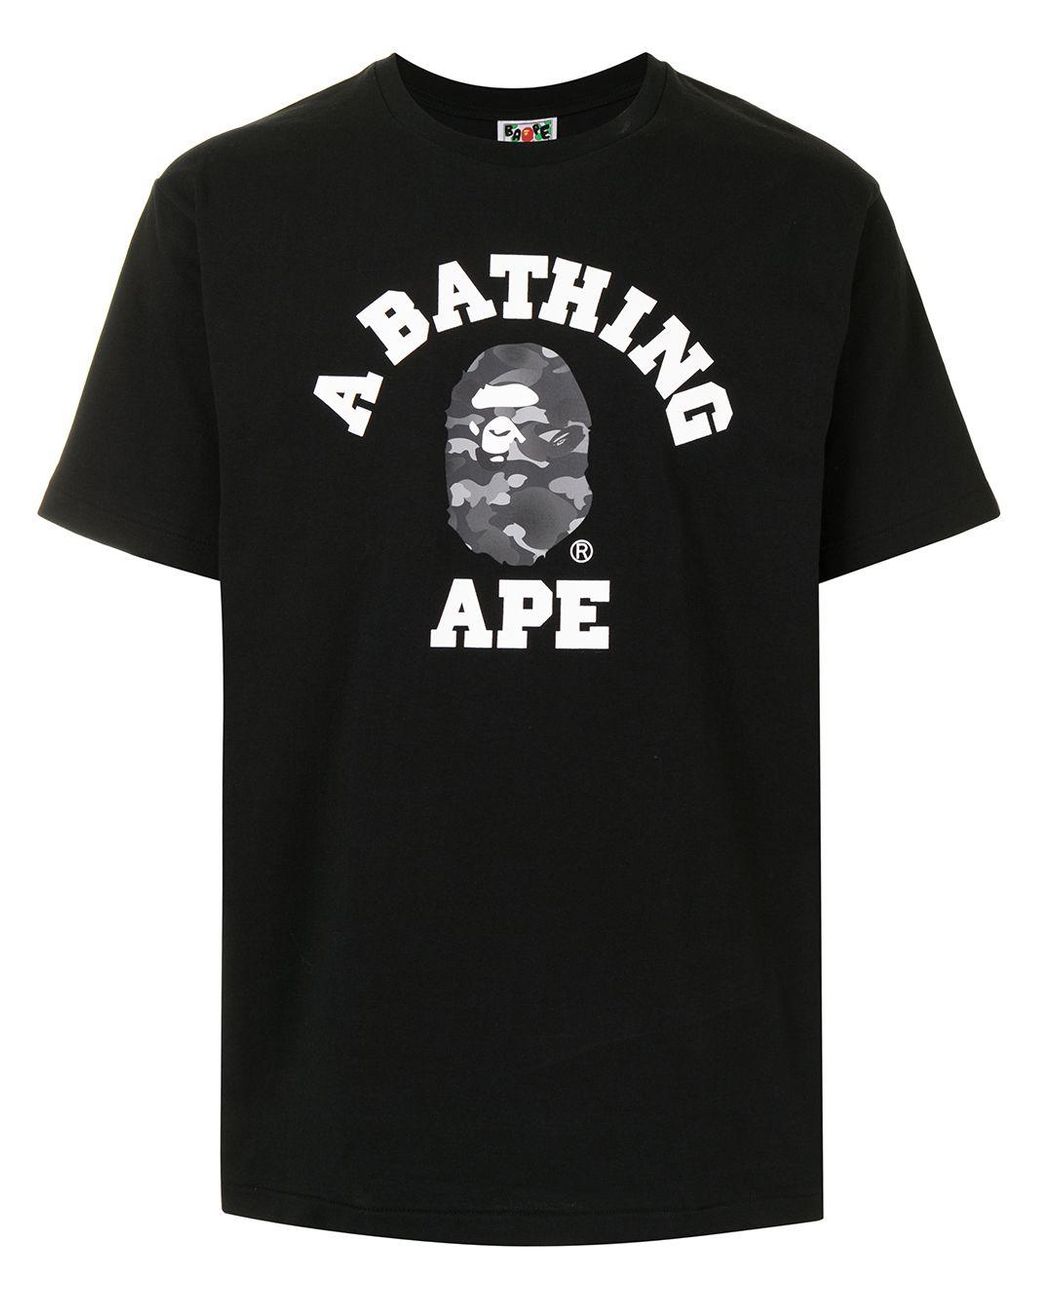 A Bathing Ape Ape Face Logo Print Cotton T-shirt in Black for Men - Lyst